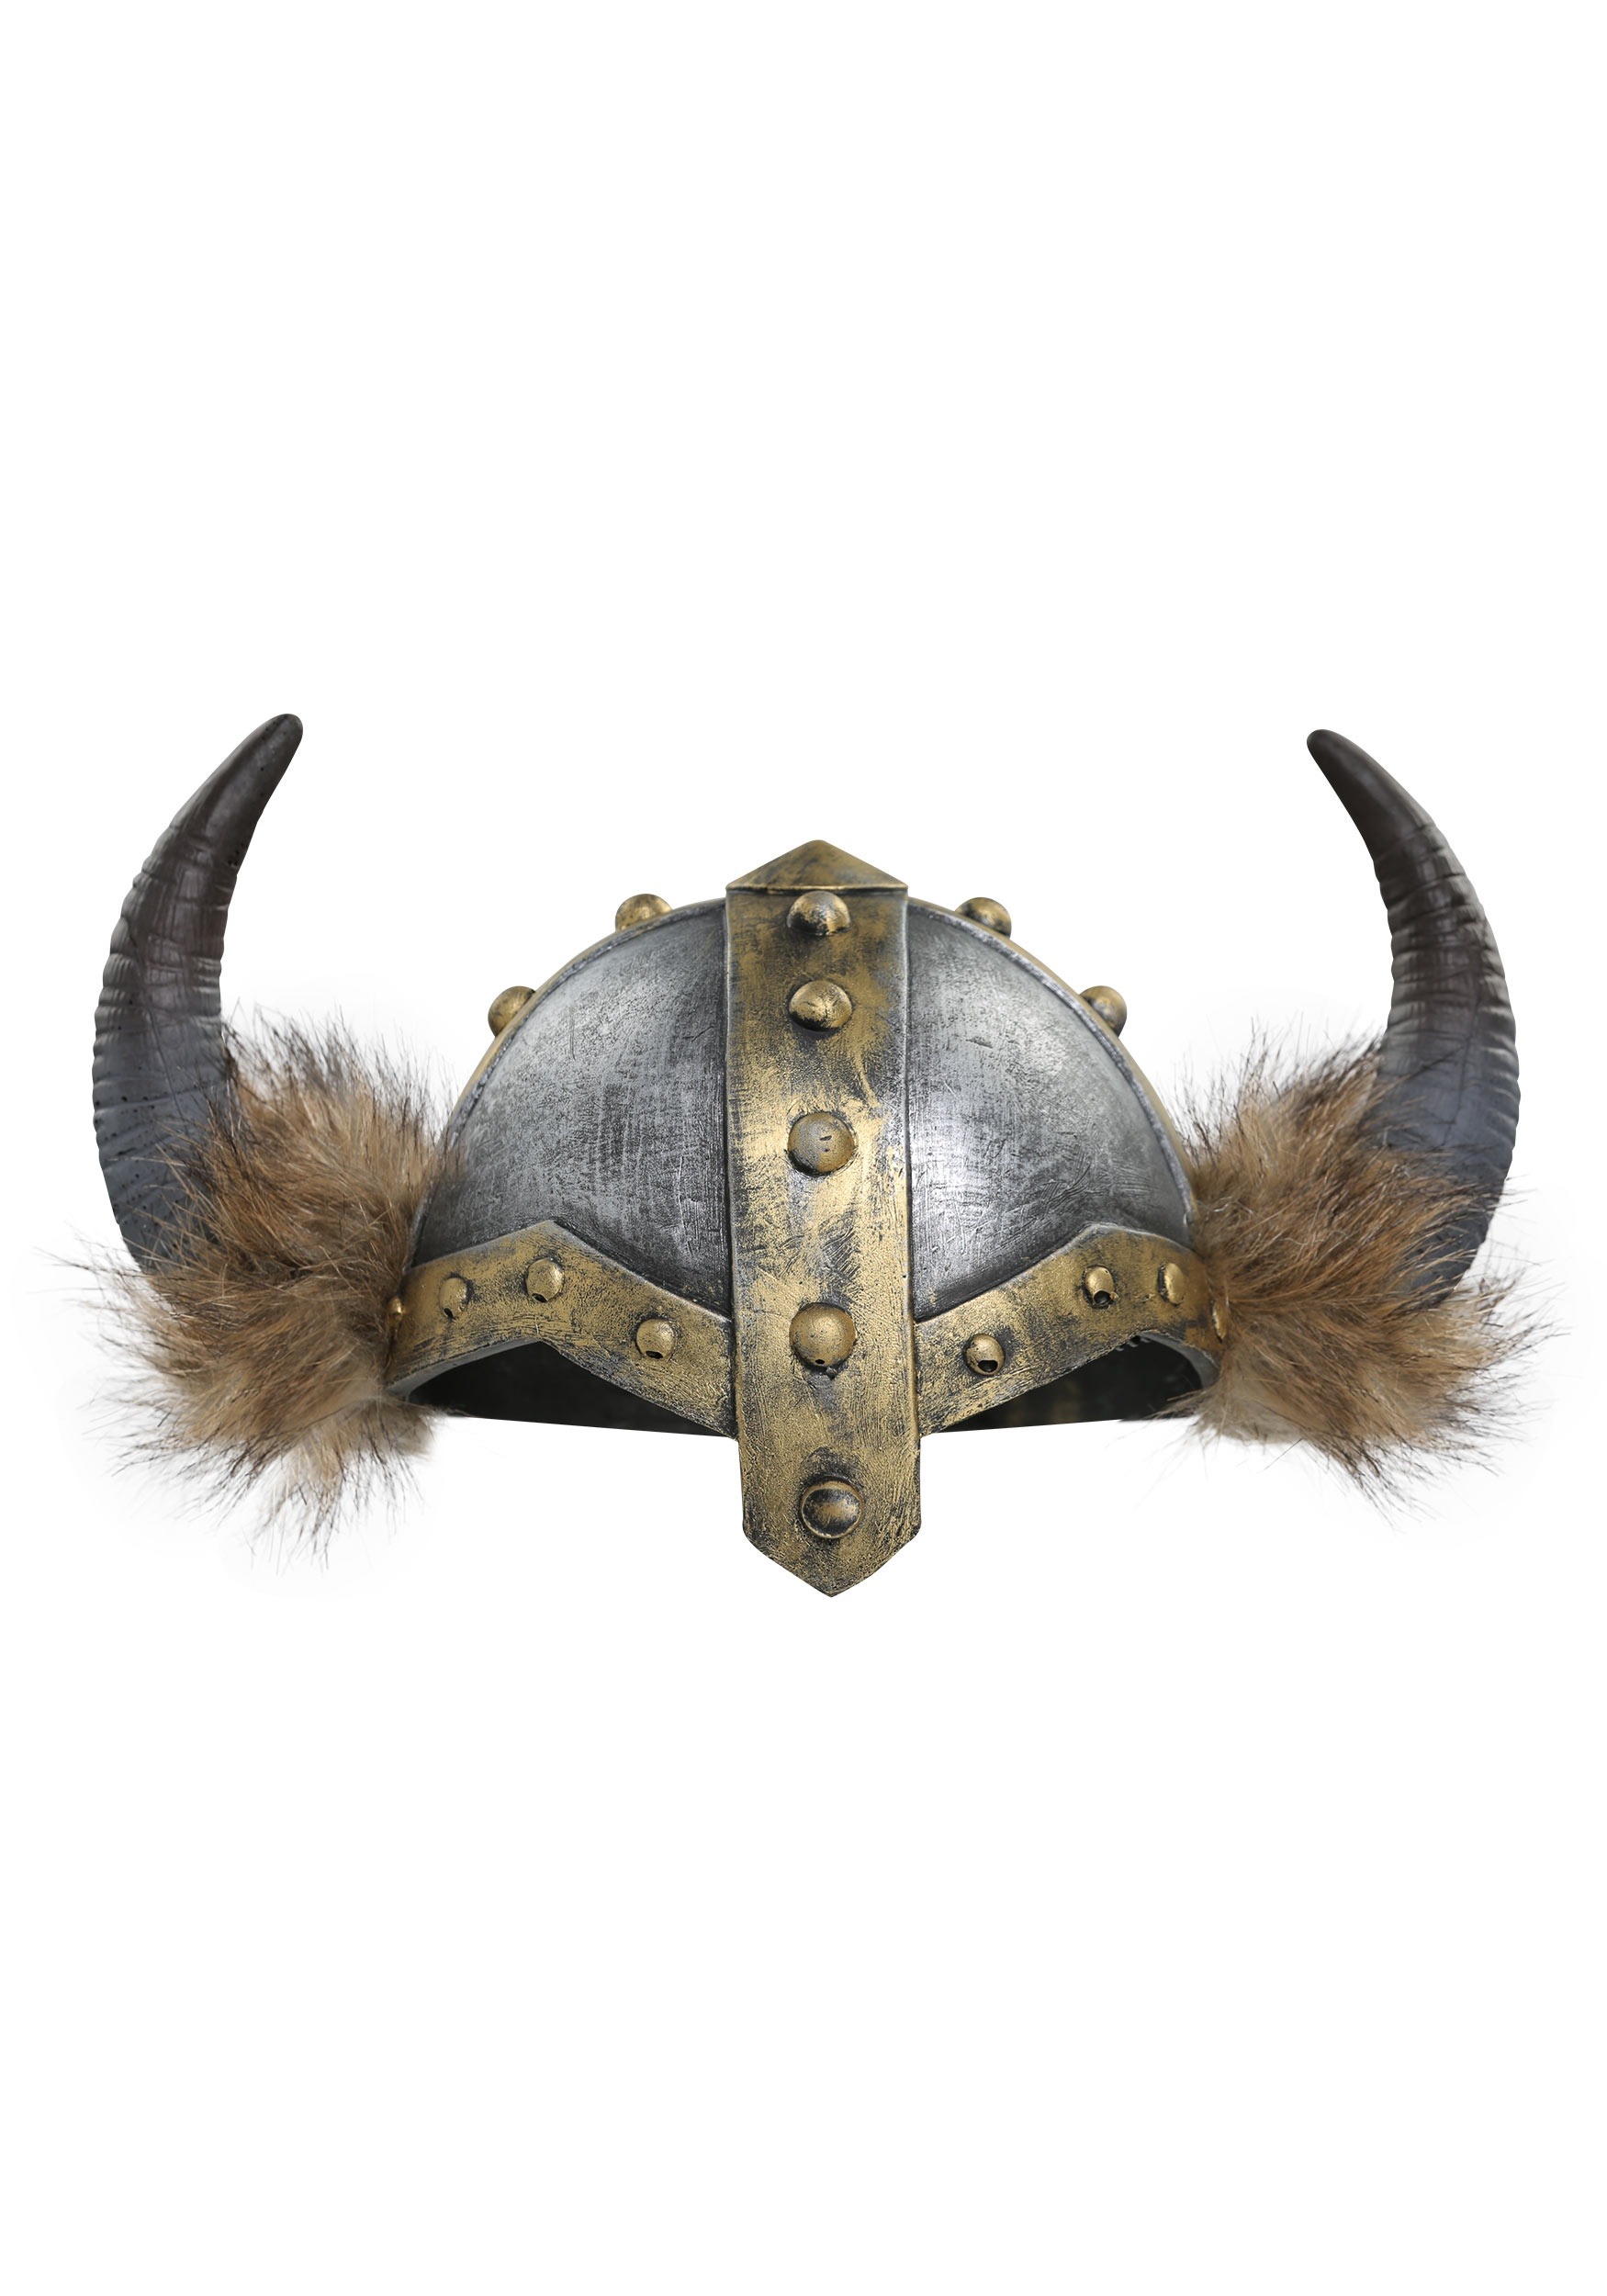 viking helmet with horns